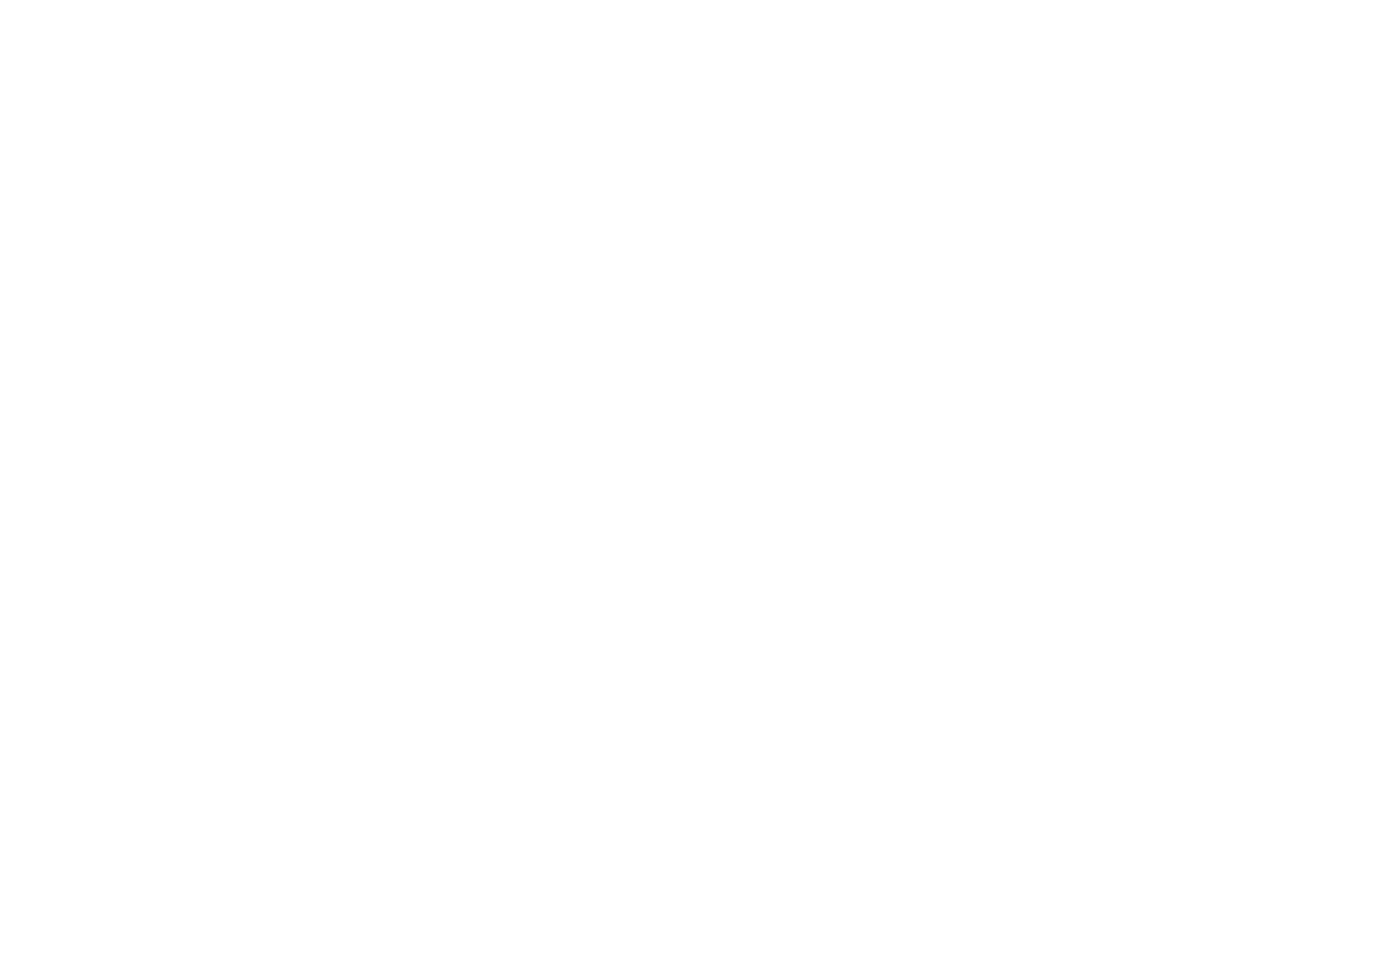 Silverlake Resources